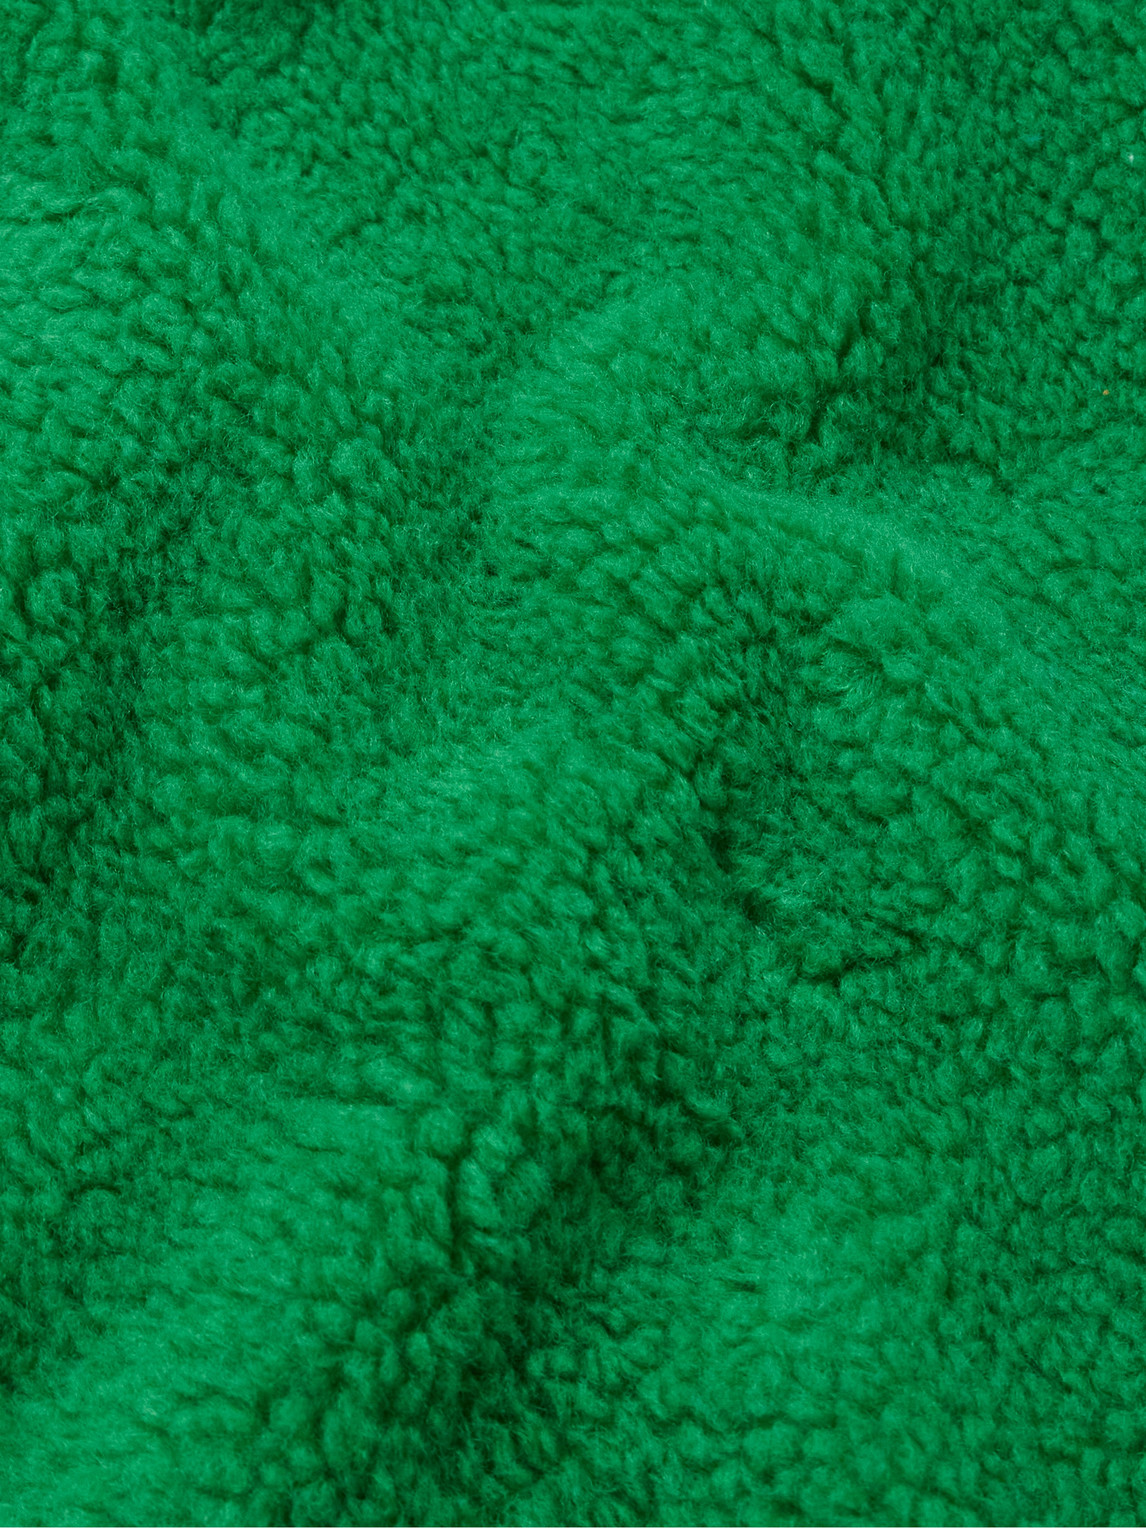 Shop Polo Ralph Lauren Shell-trimmed Fleece Jacket In Green